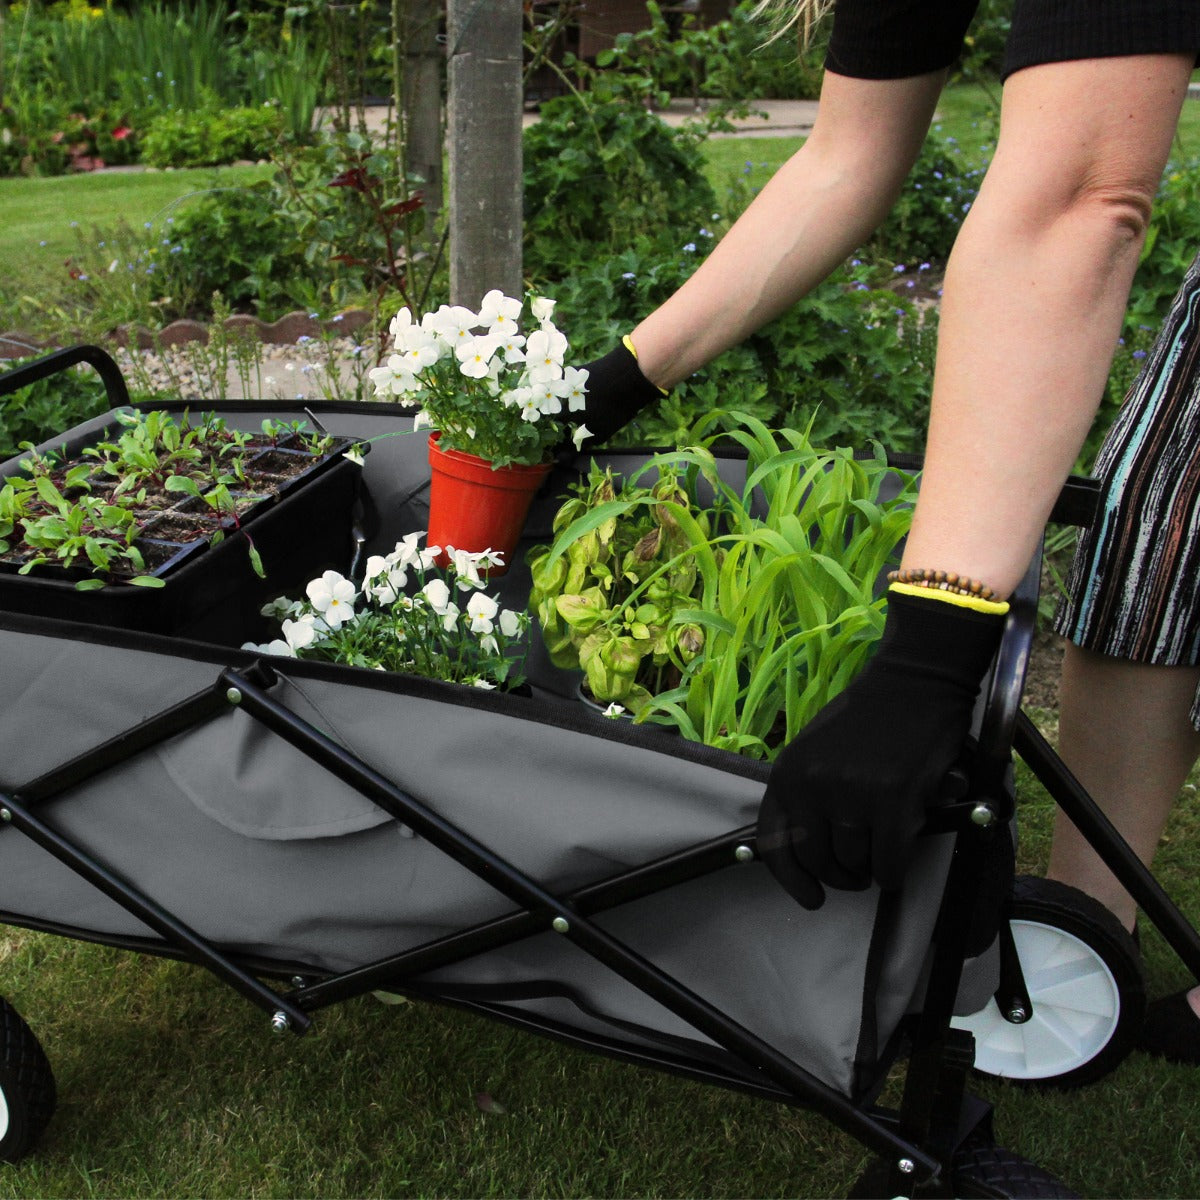 Foldable Garden Cart Grey